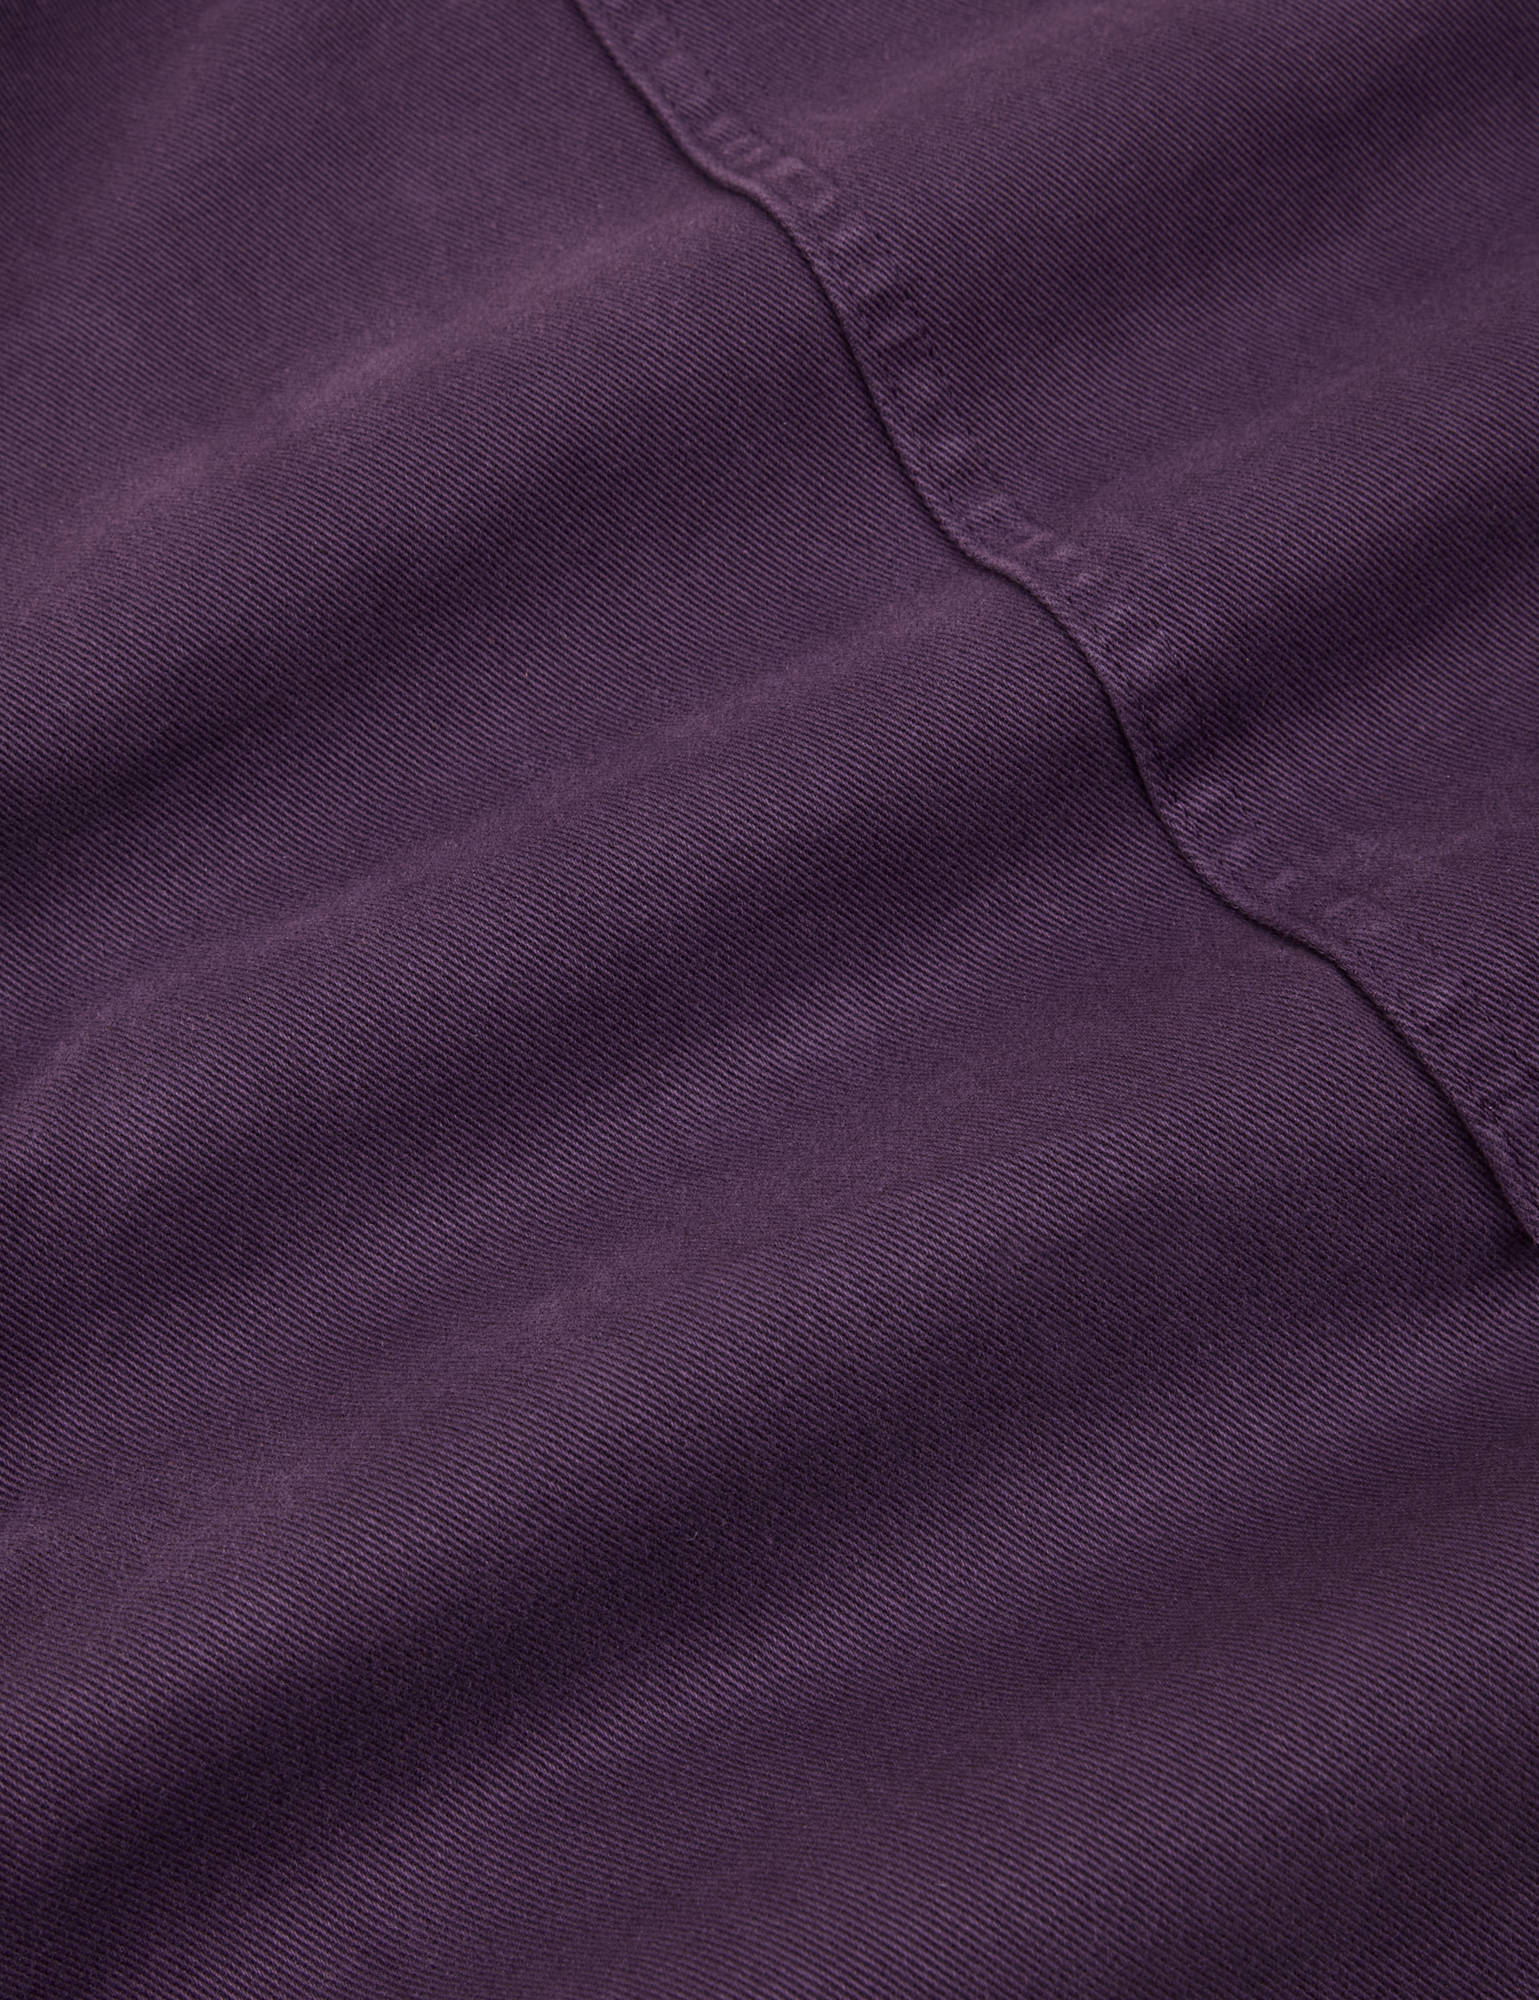 Classic Work Shorts in Nebula Purple fabric detail close up